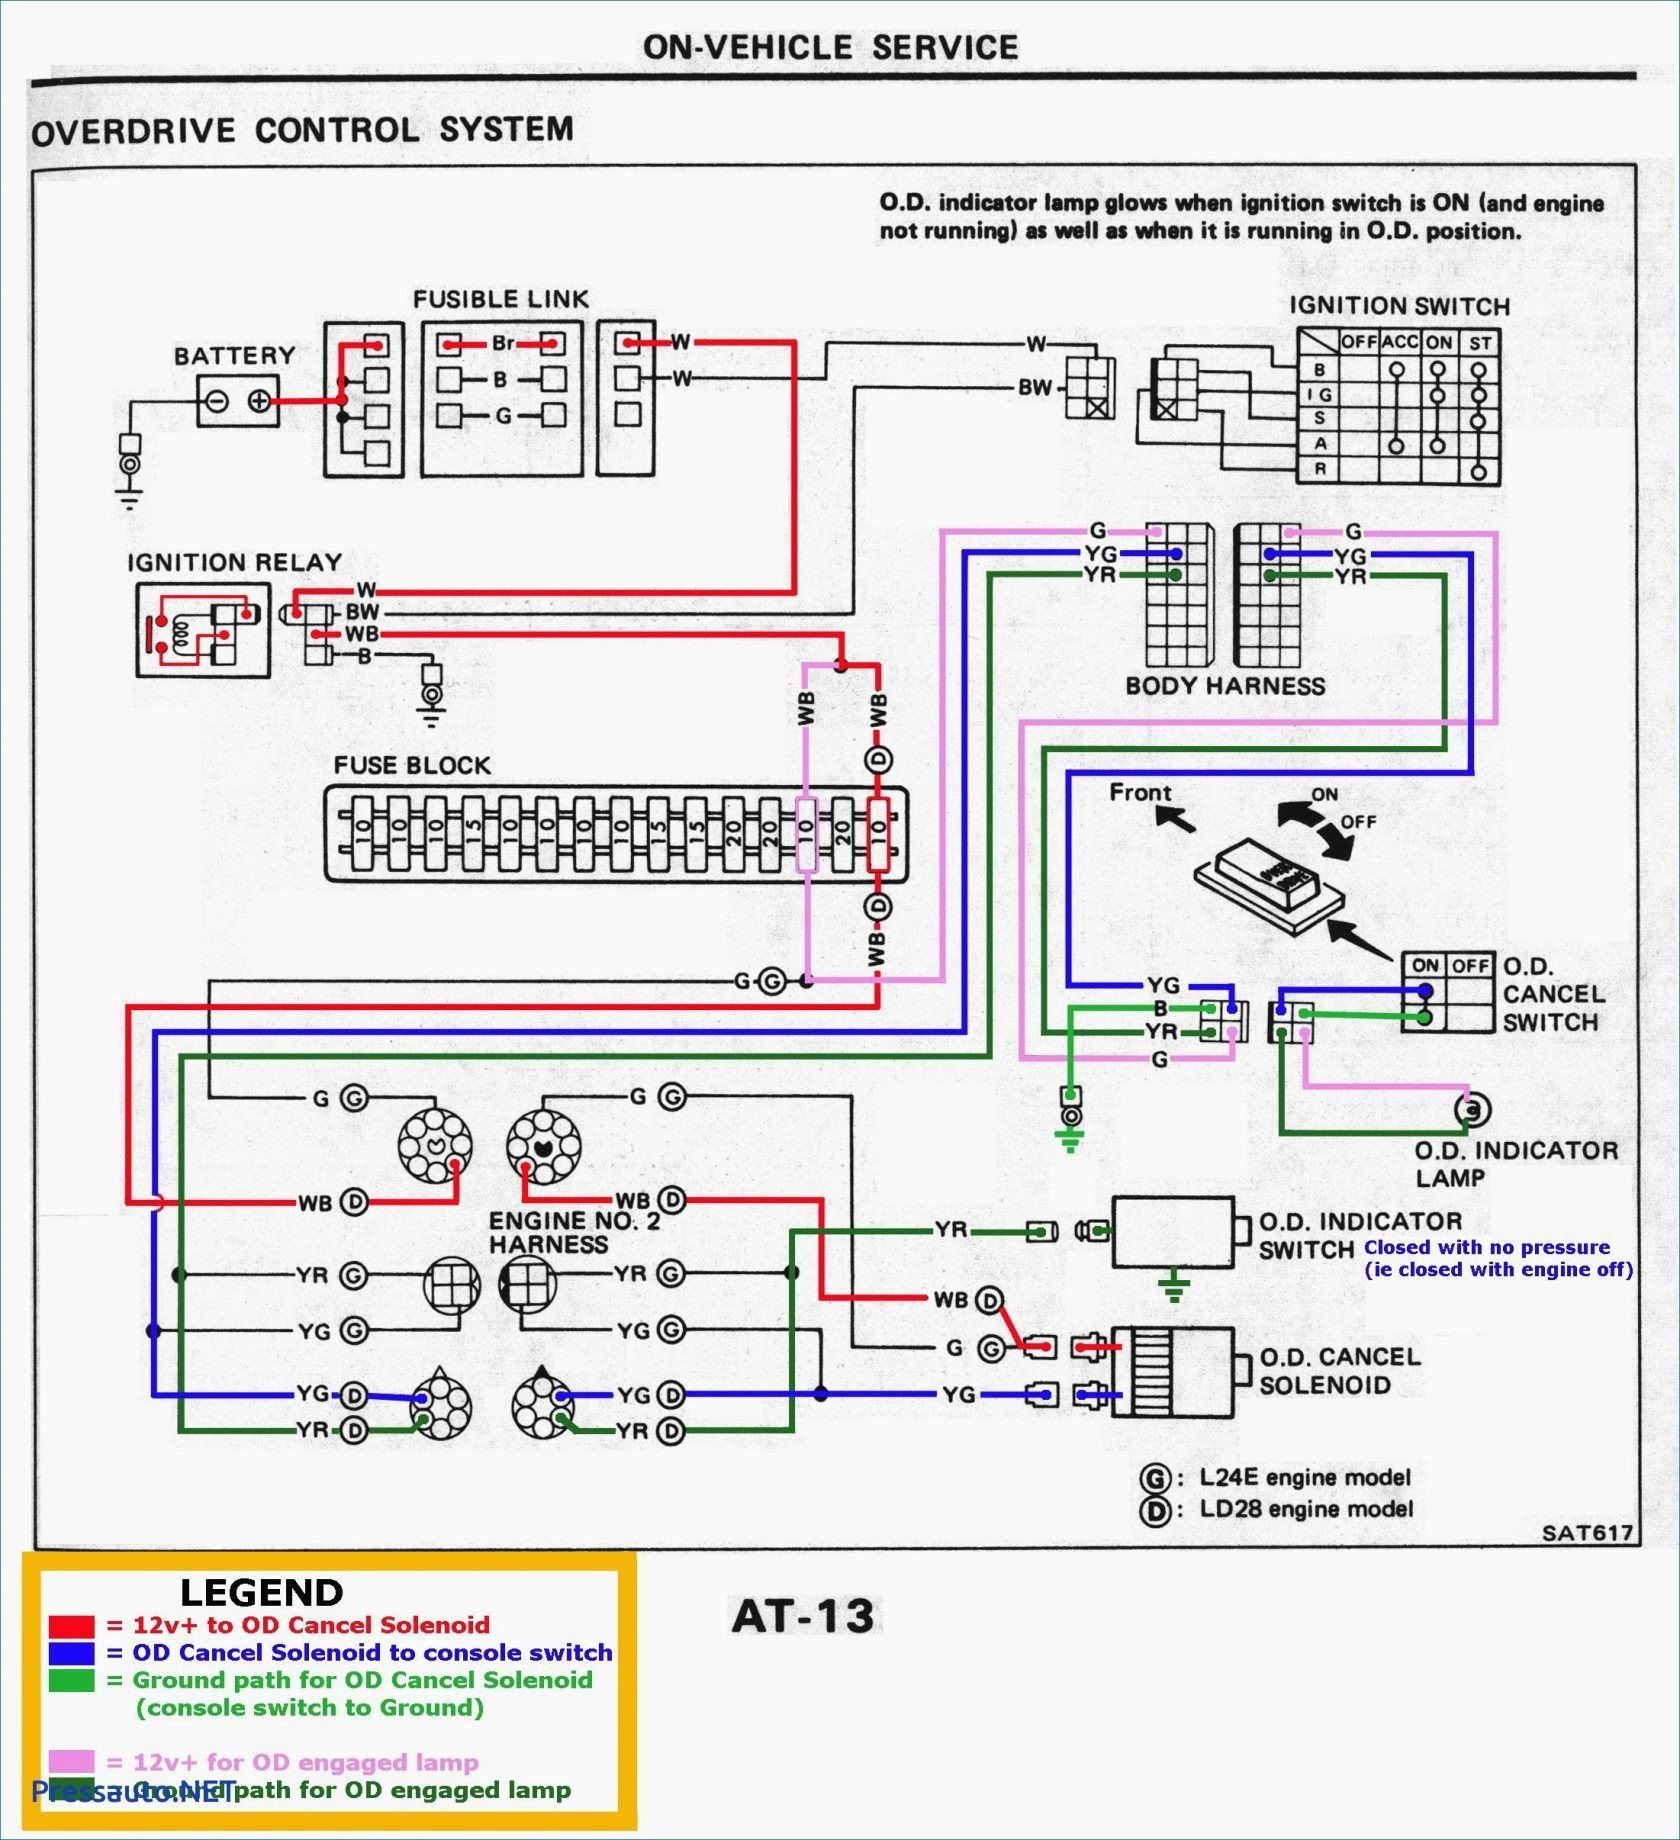 Truck Lite Wiring Diagram 98 Gmc Truck Tail Light Wiring Wiring Diagram Used Of Truck Lite Wiring Diagram